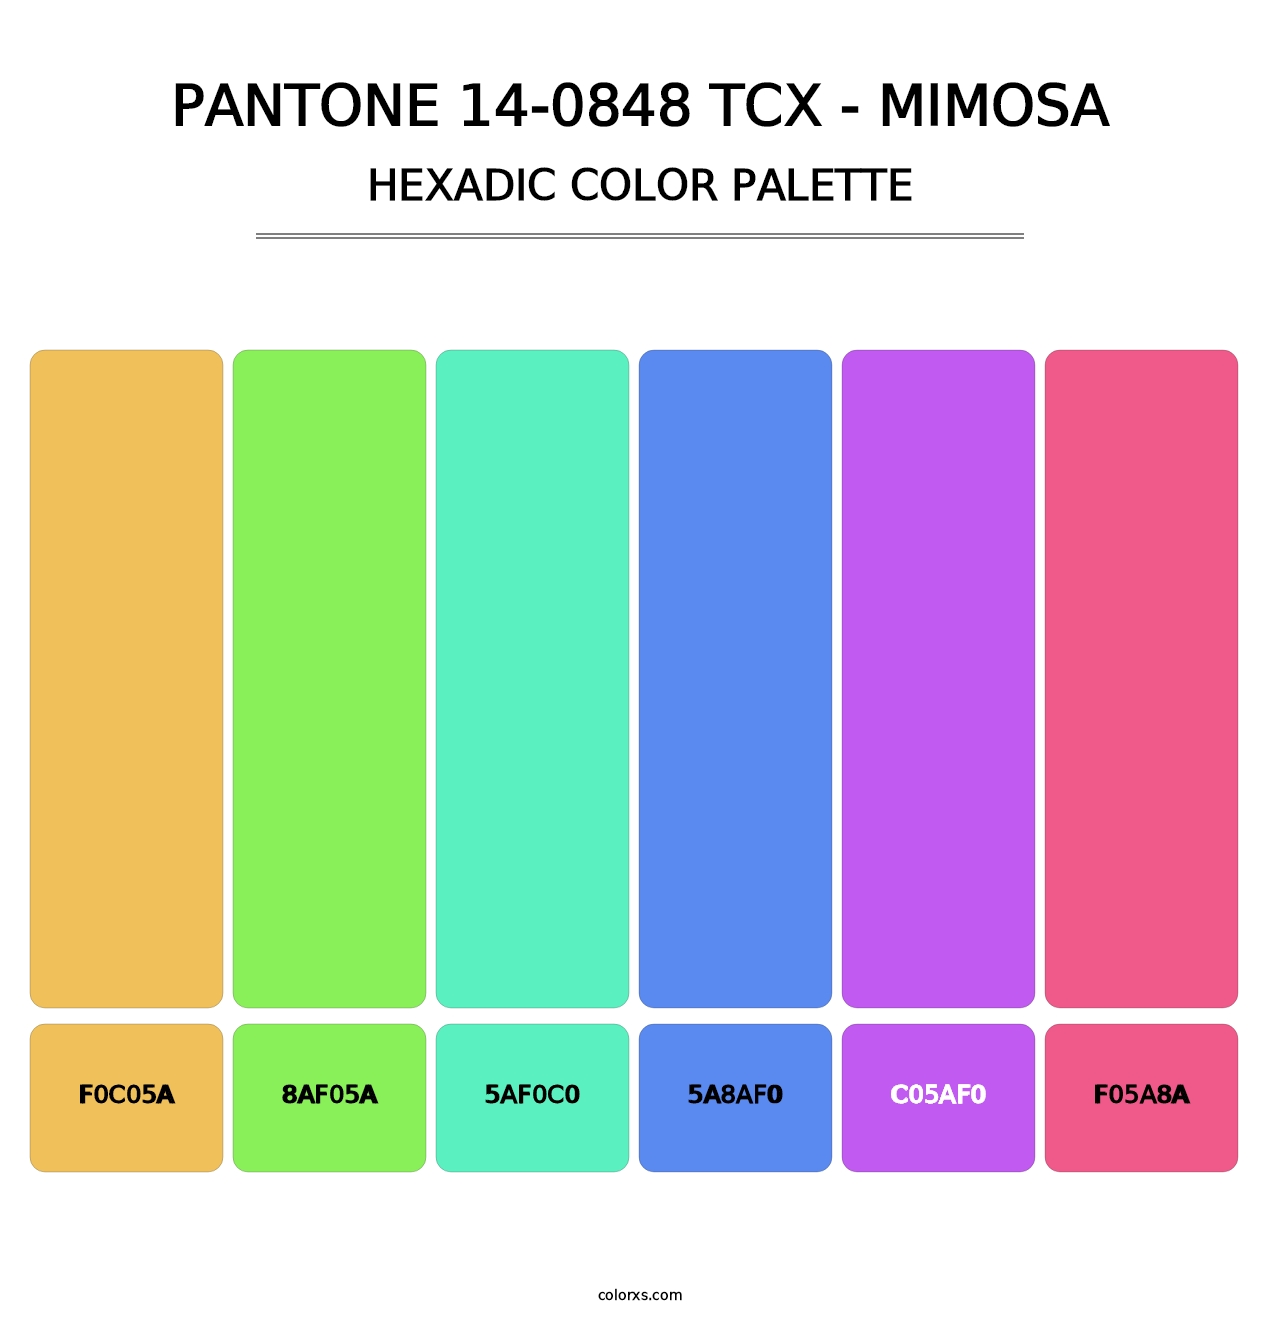 PANTONE 14-0848 TCX - Mimosa - Hexadic Color Palette